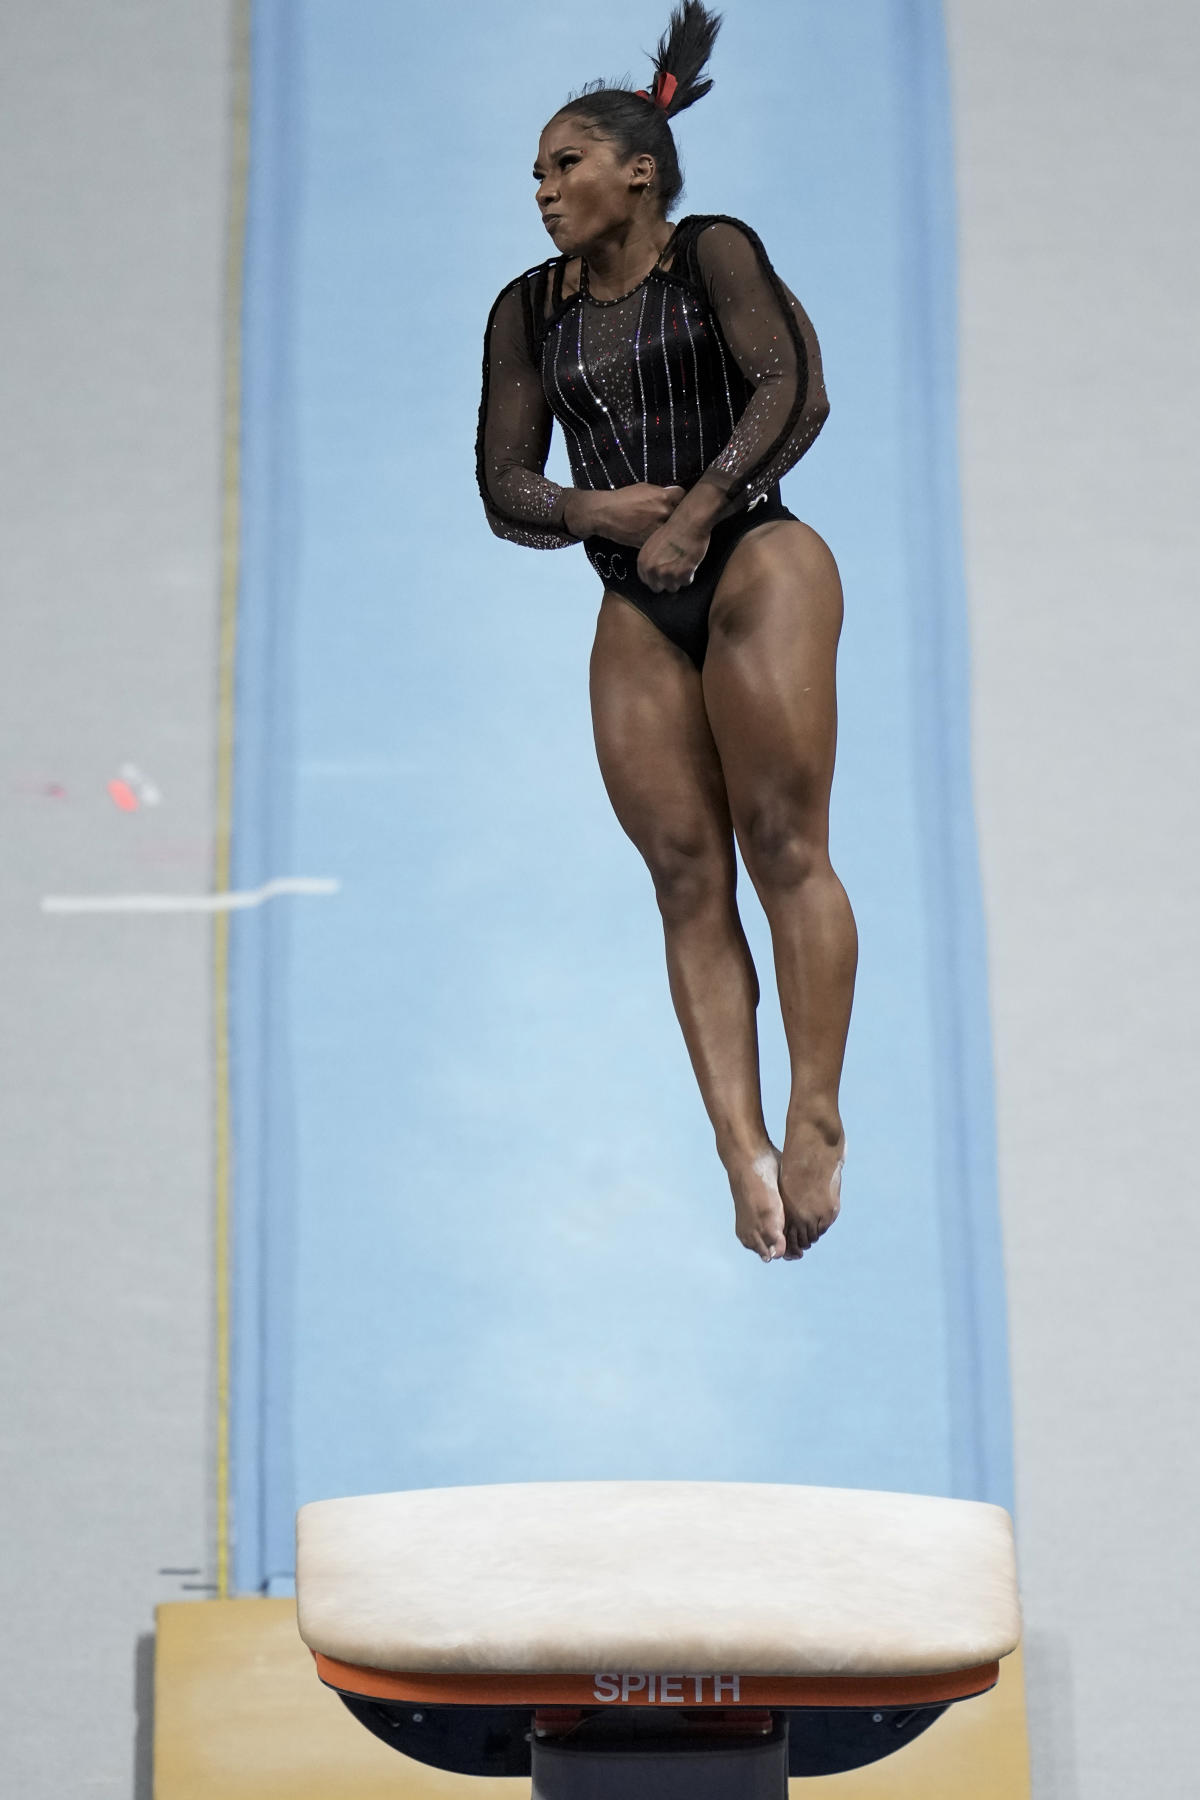 Simone Biles Signals a Return to Elite Gymnastics - The New York Times